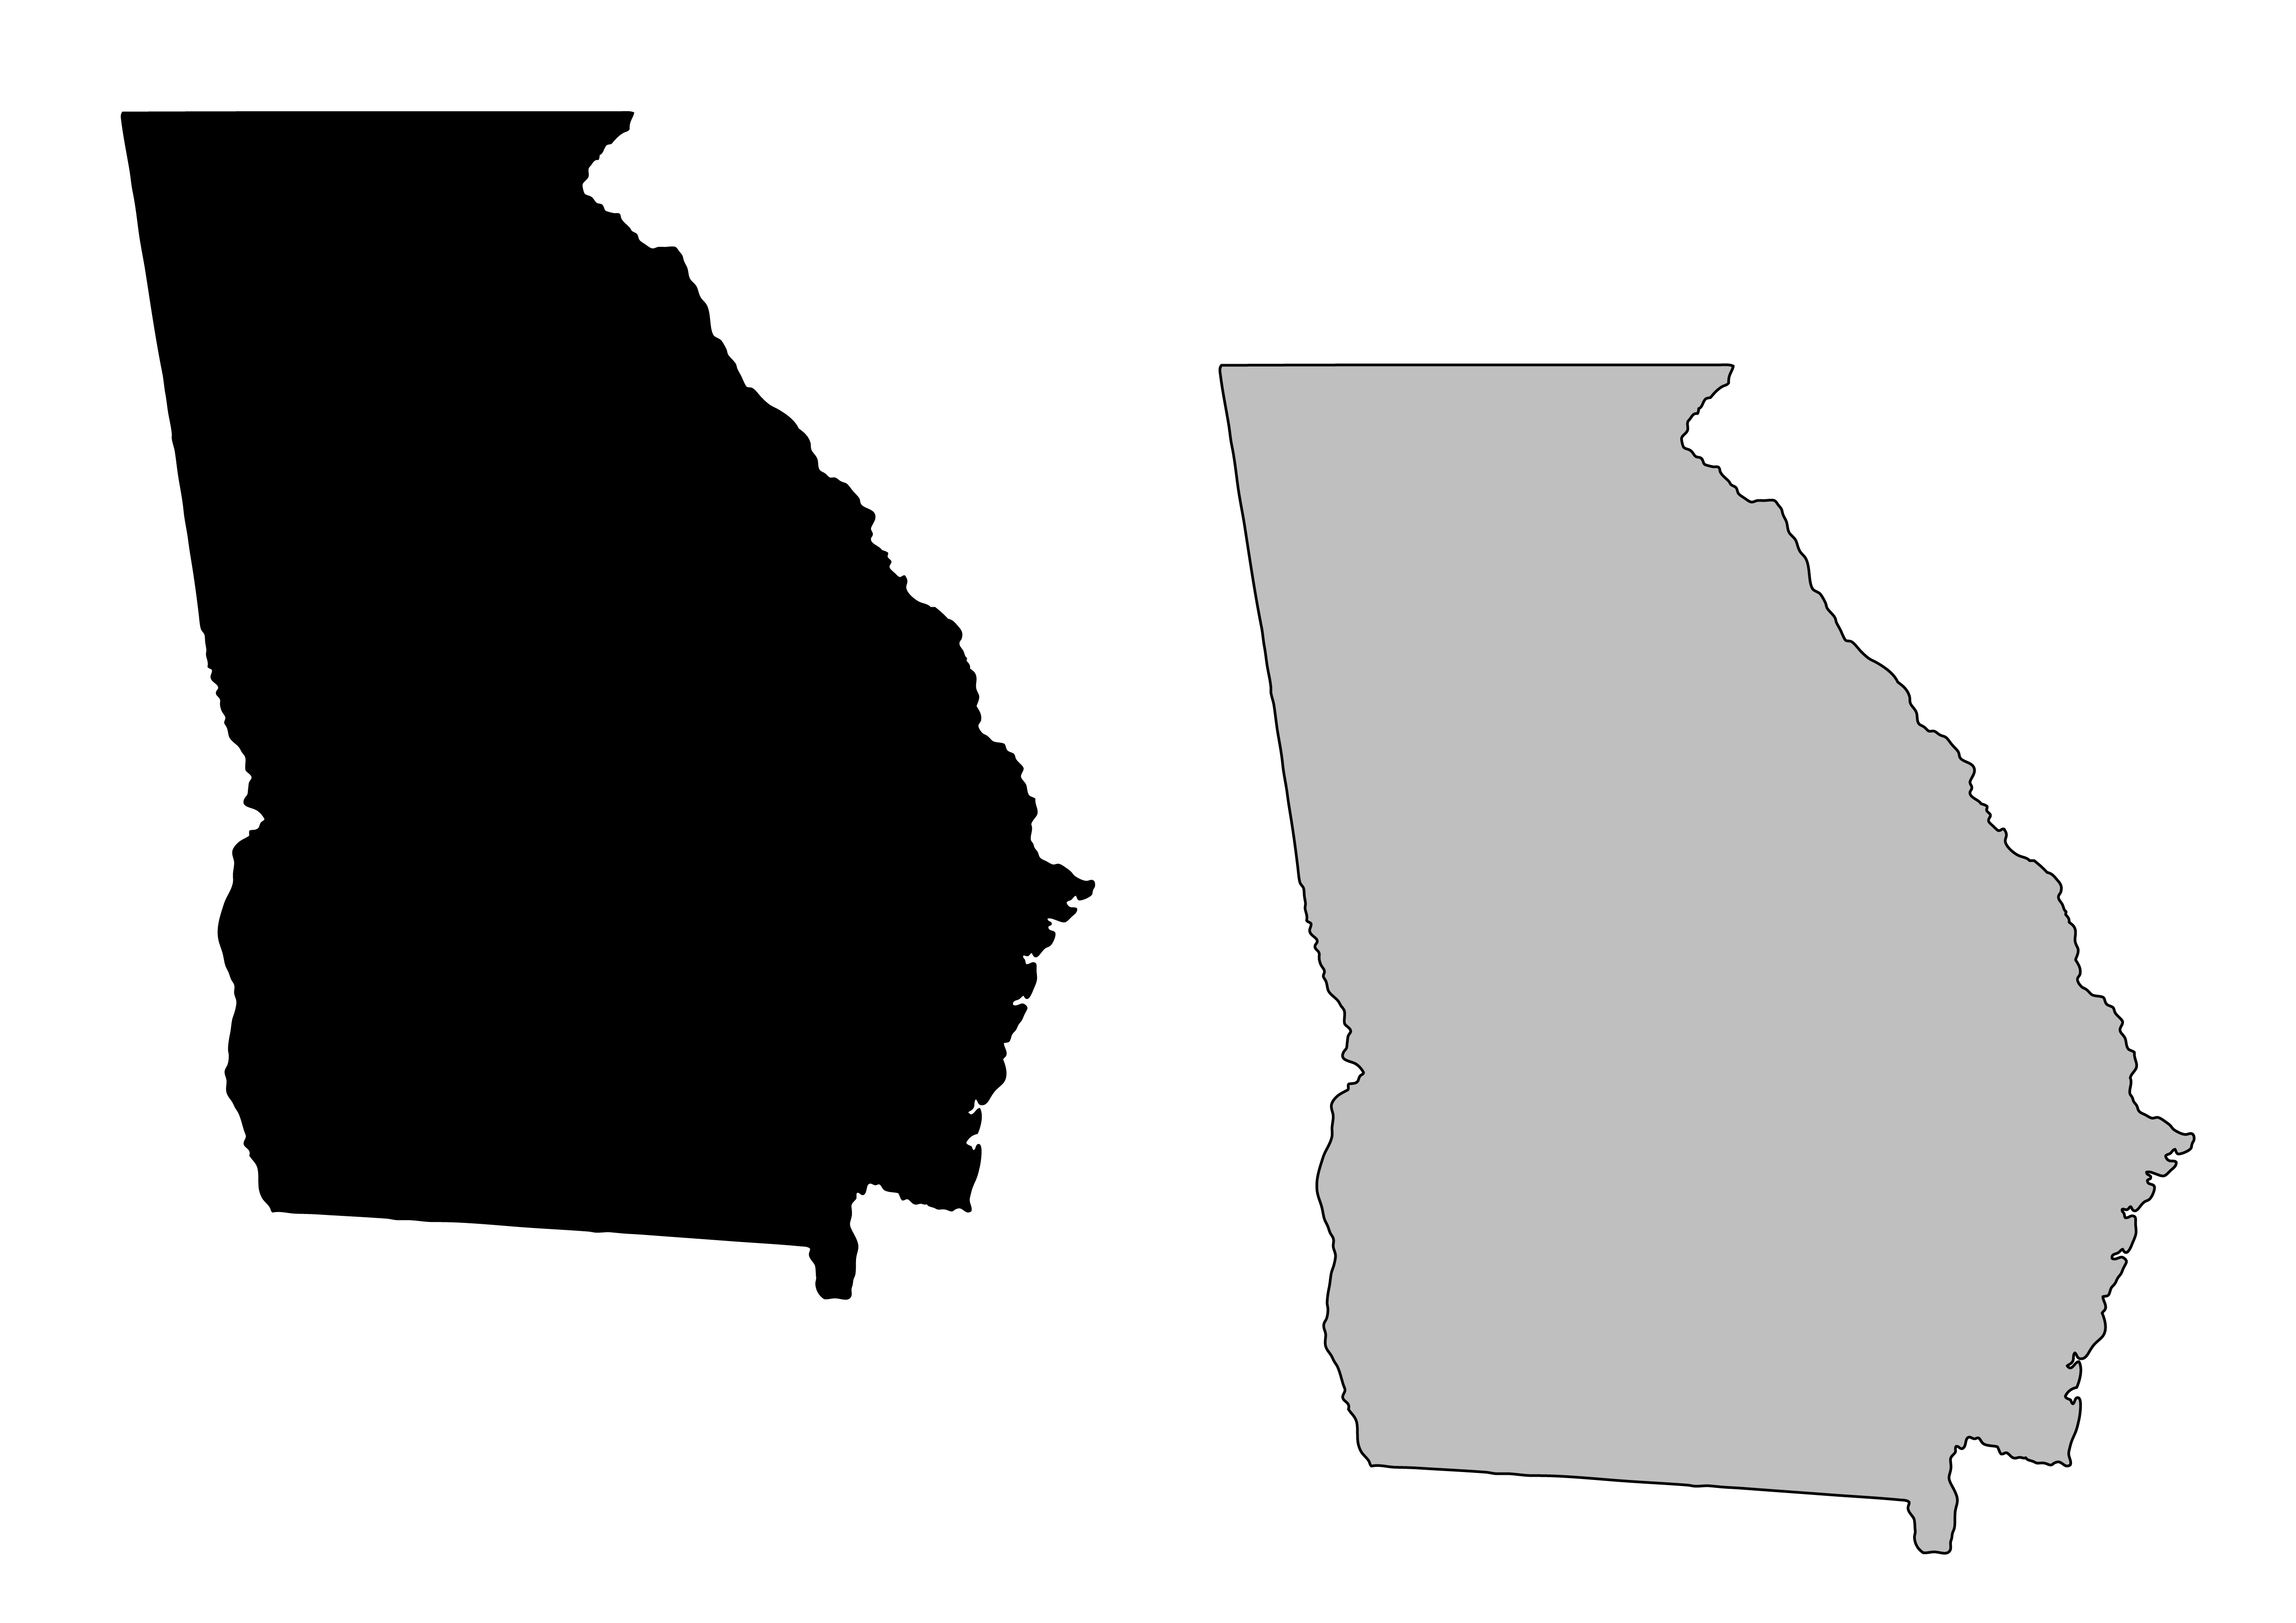 Georgia State Outline